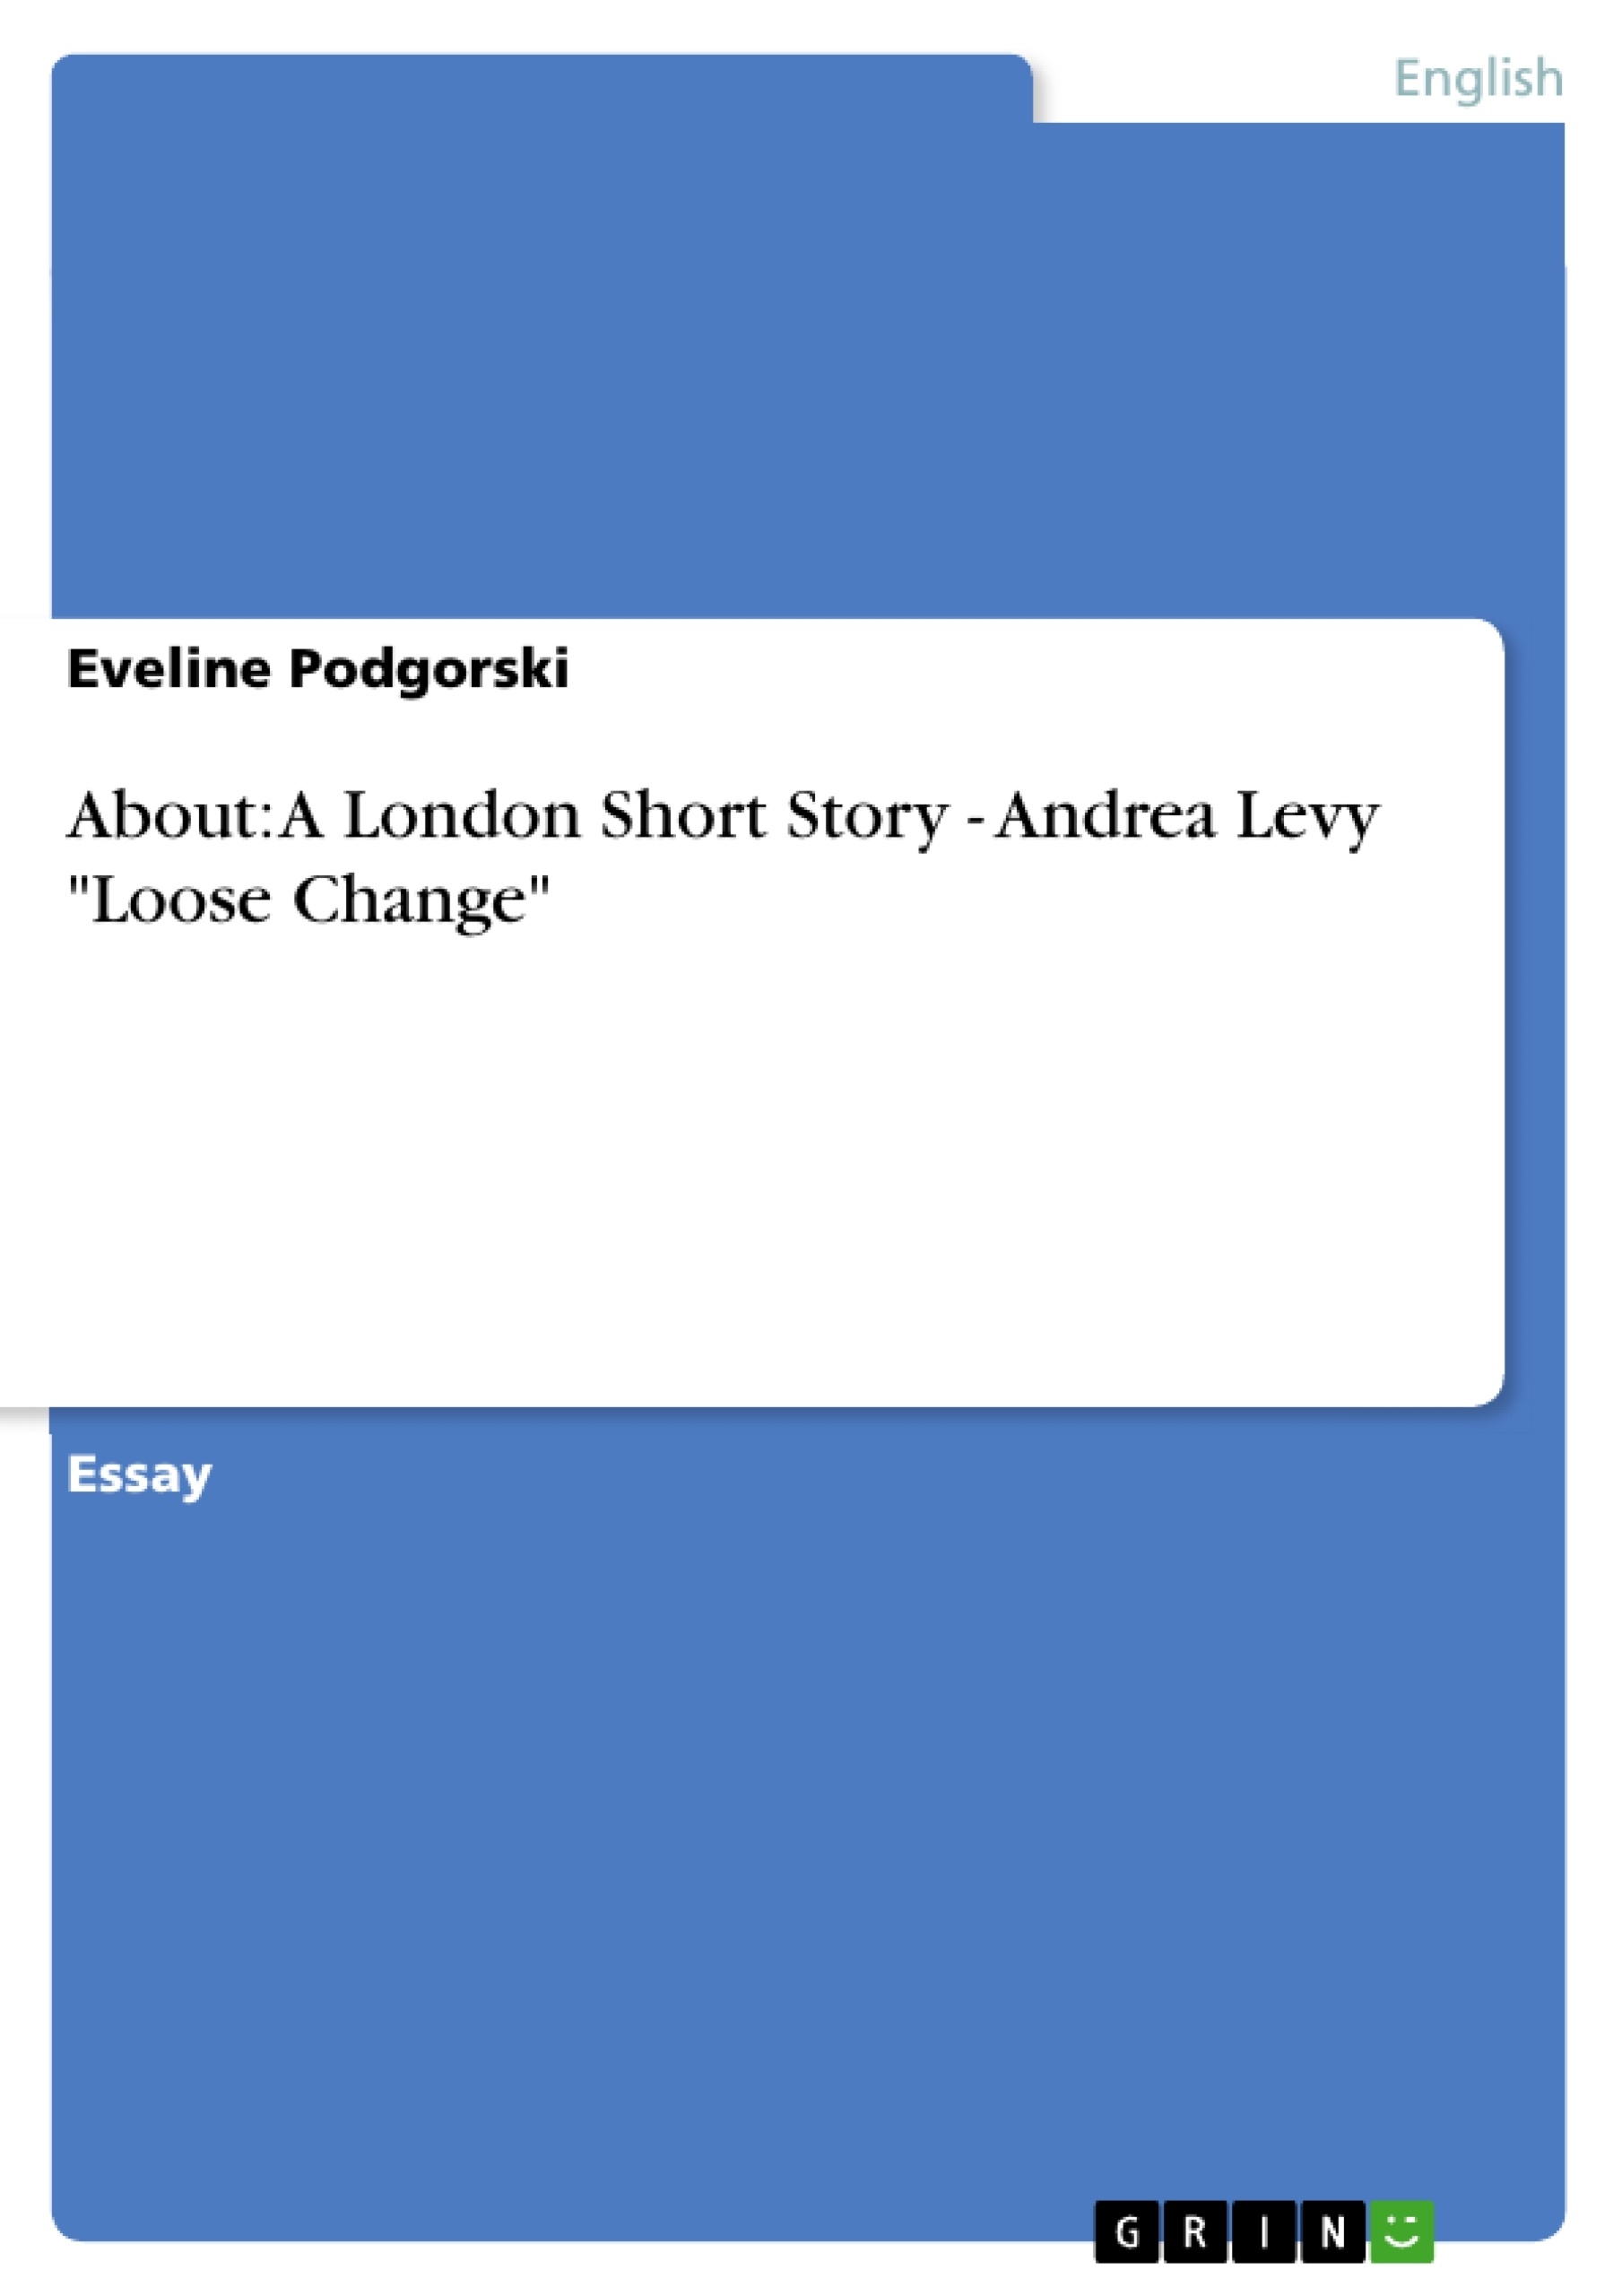 Titre: About: A London Short Story - Andrea Levy "Loose Change"